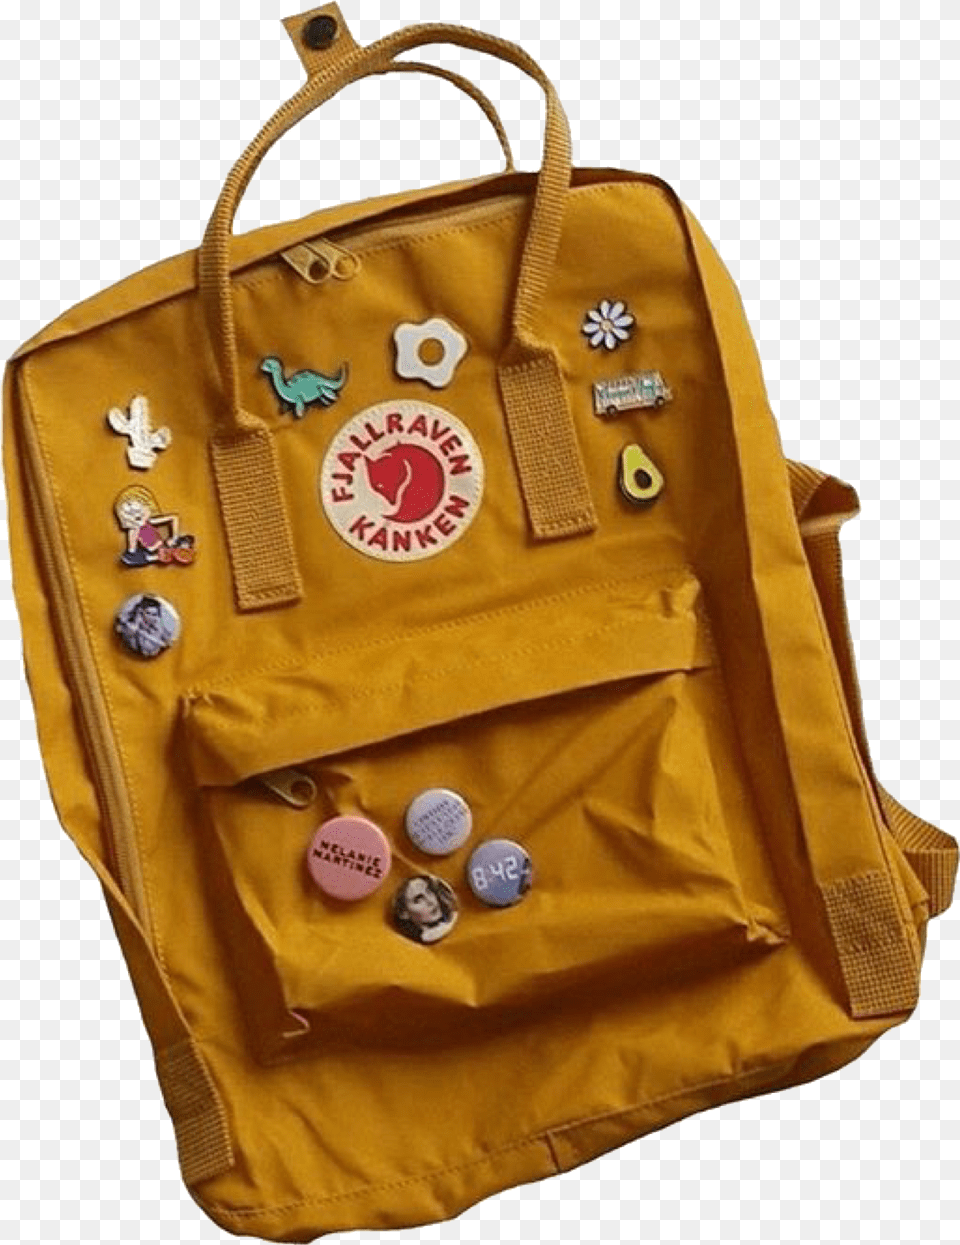 Transparent Clothes Pin Aesthetic Kanken Backpack, Bag, Accessories, Handbag Png